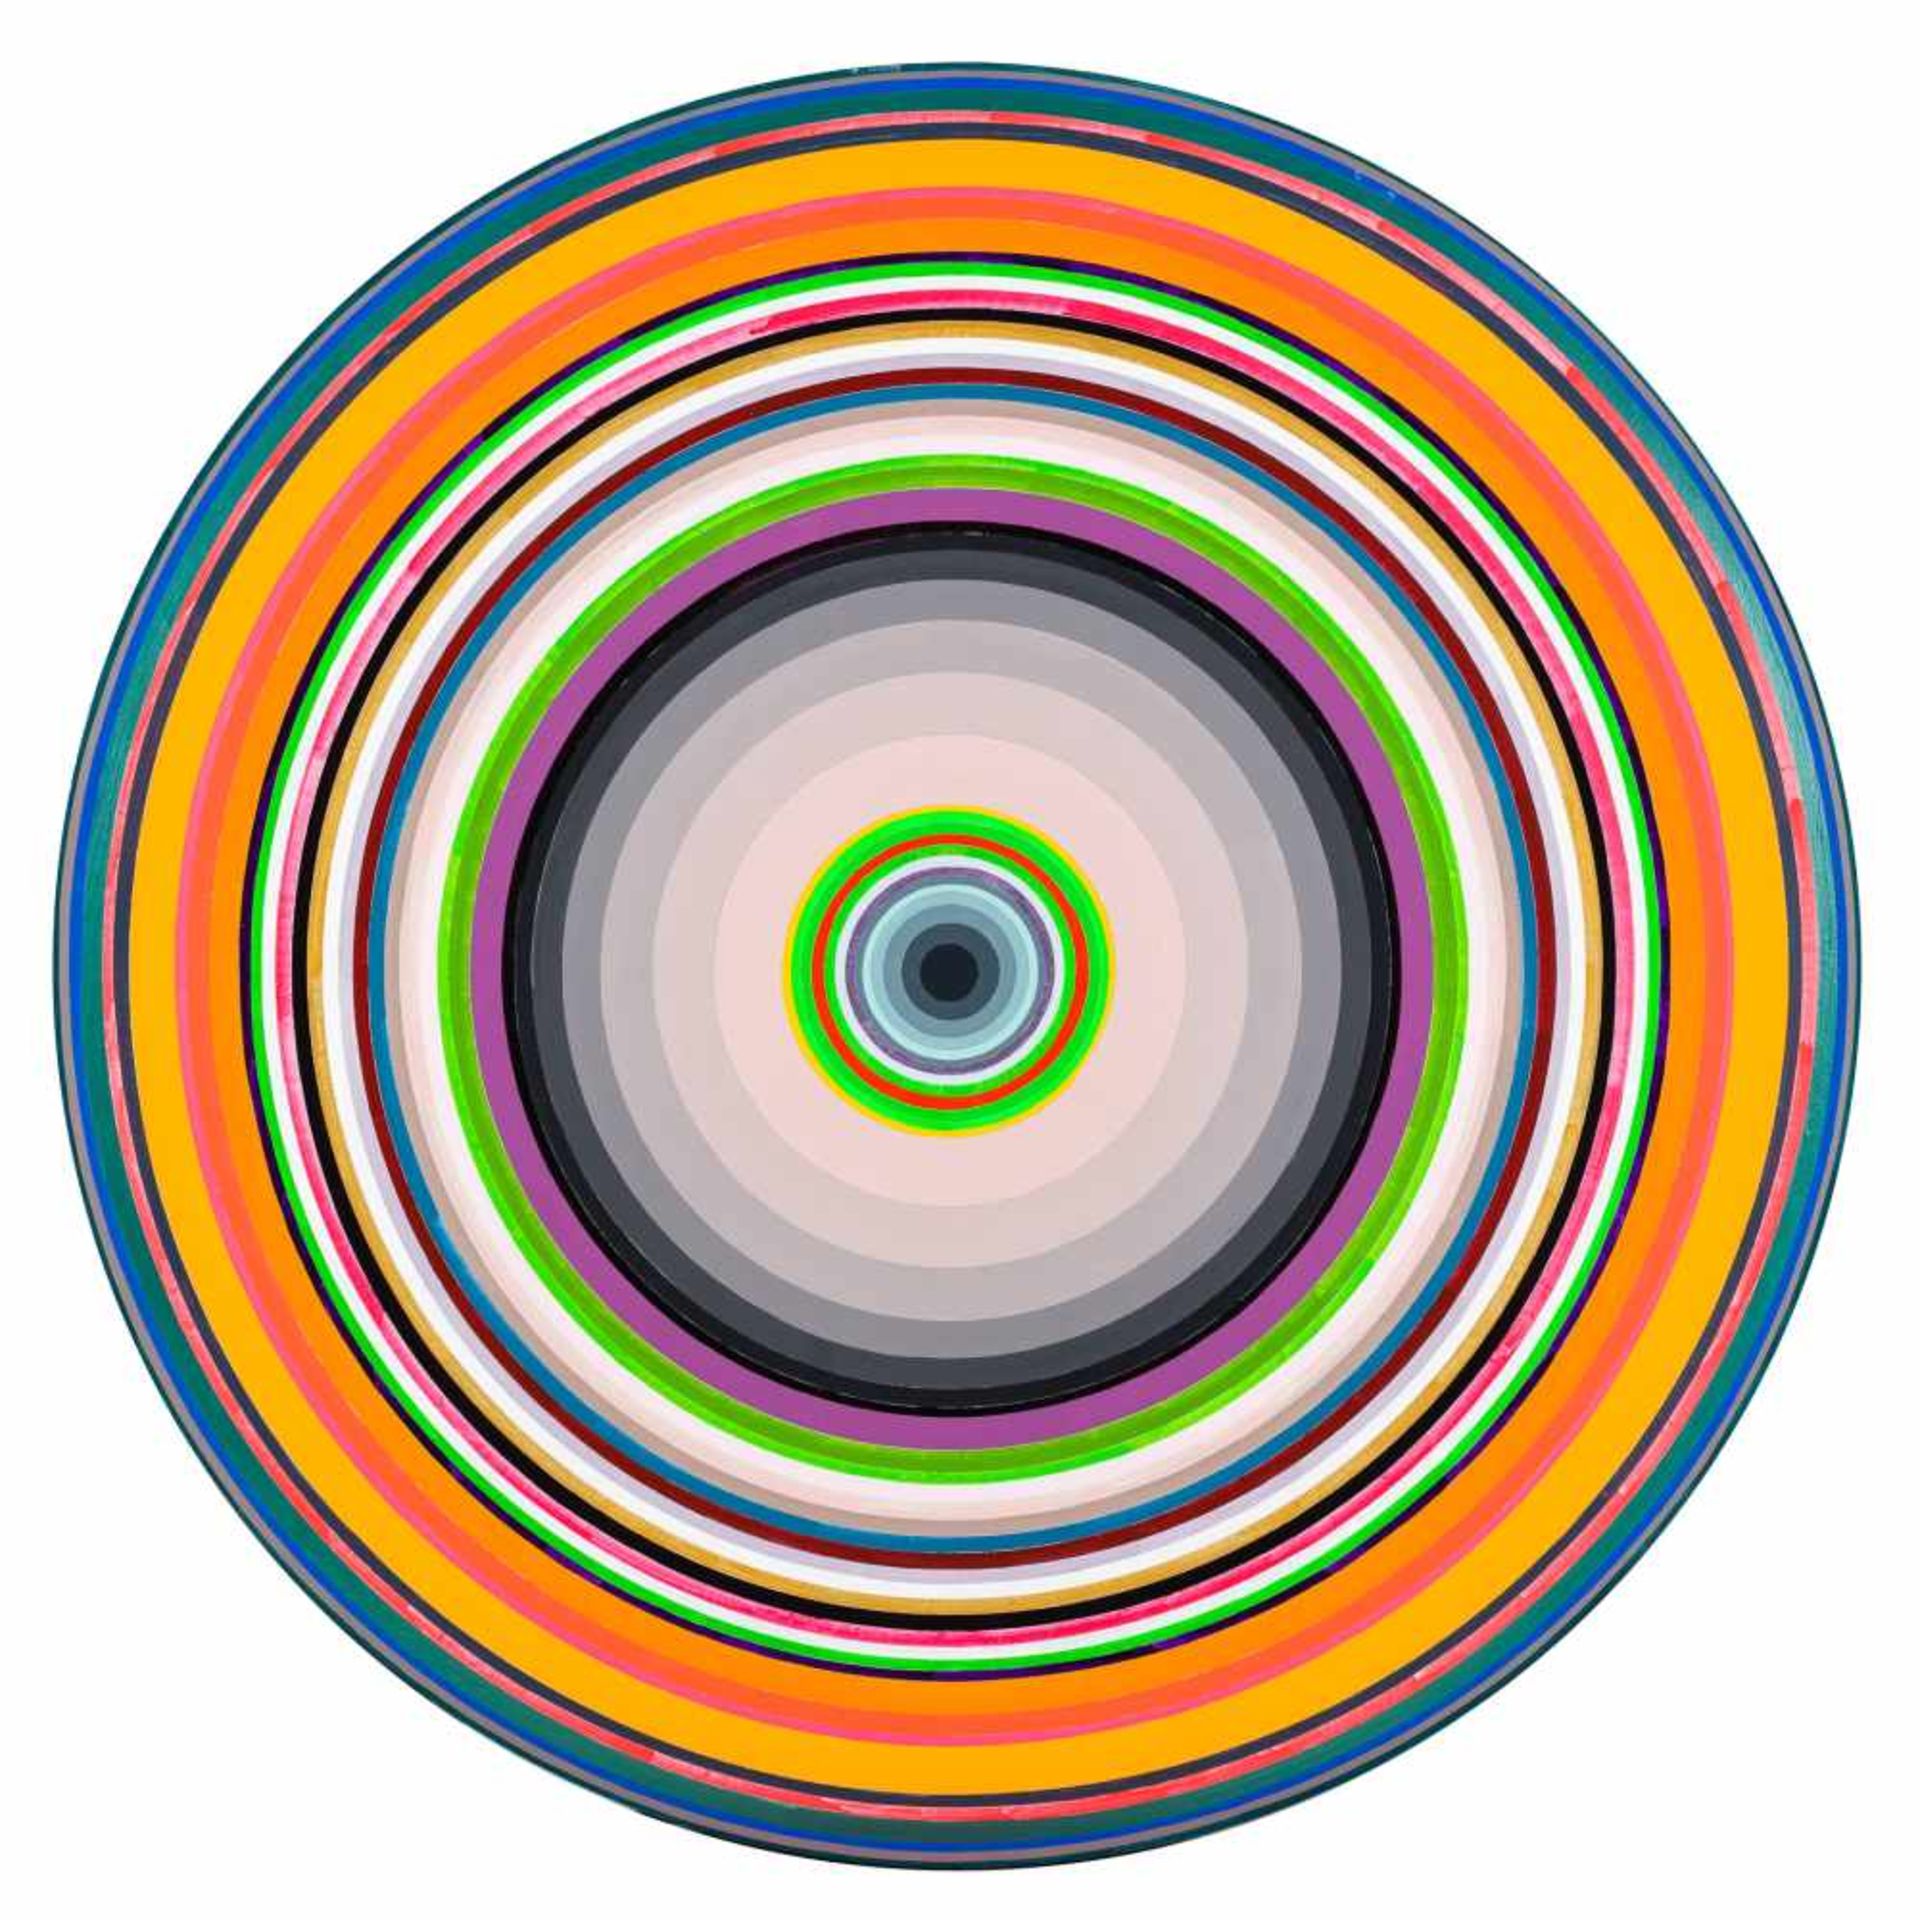 Gary Lang (hs art)Ojai, CA 1950 *MA RRO RO (aus der Serie CIRCLES)Acryl auf Leinwand / acrylic on